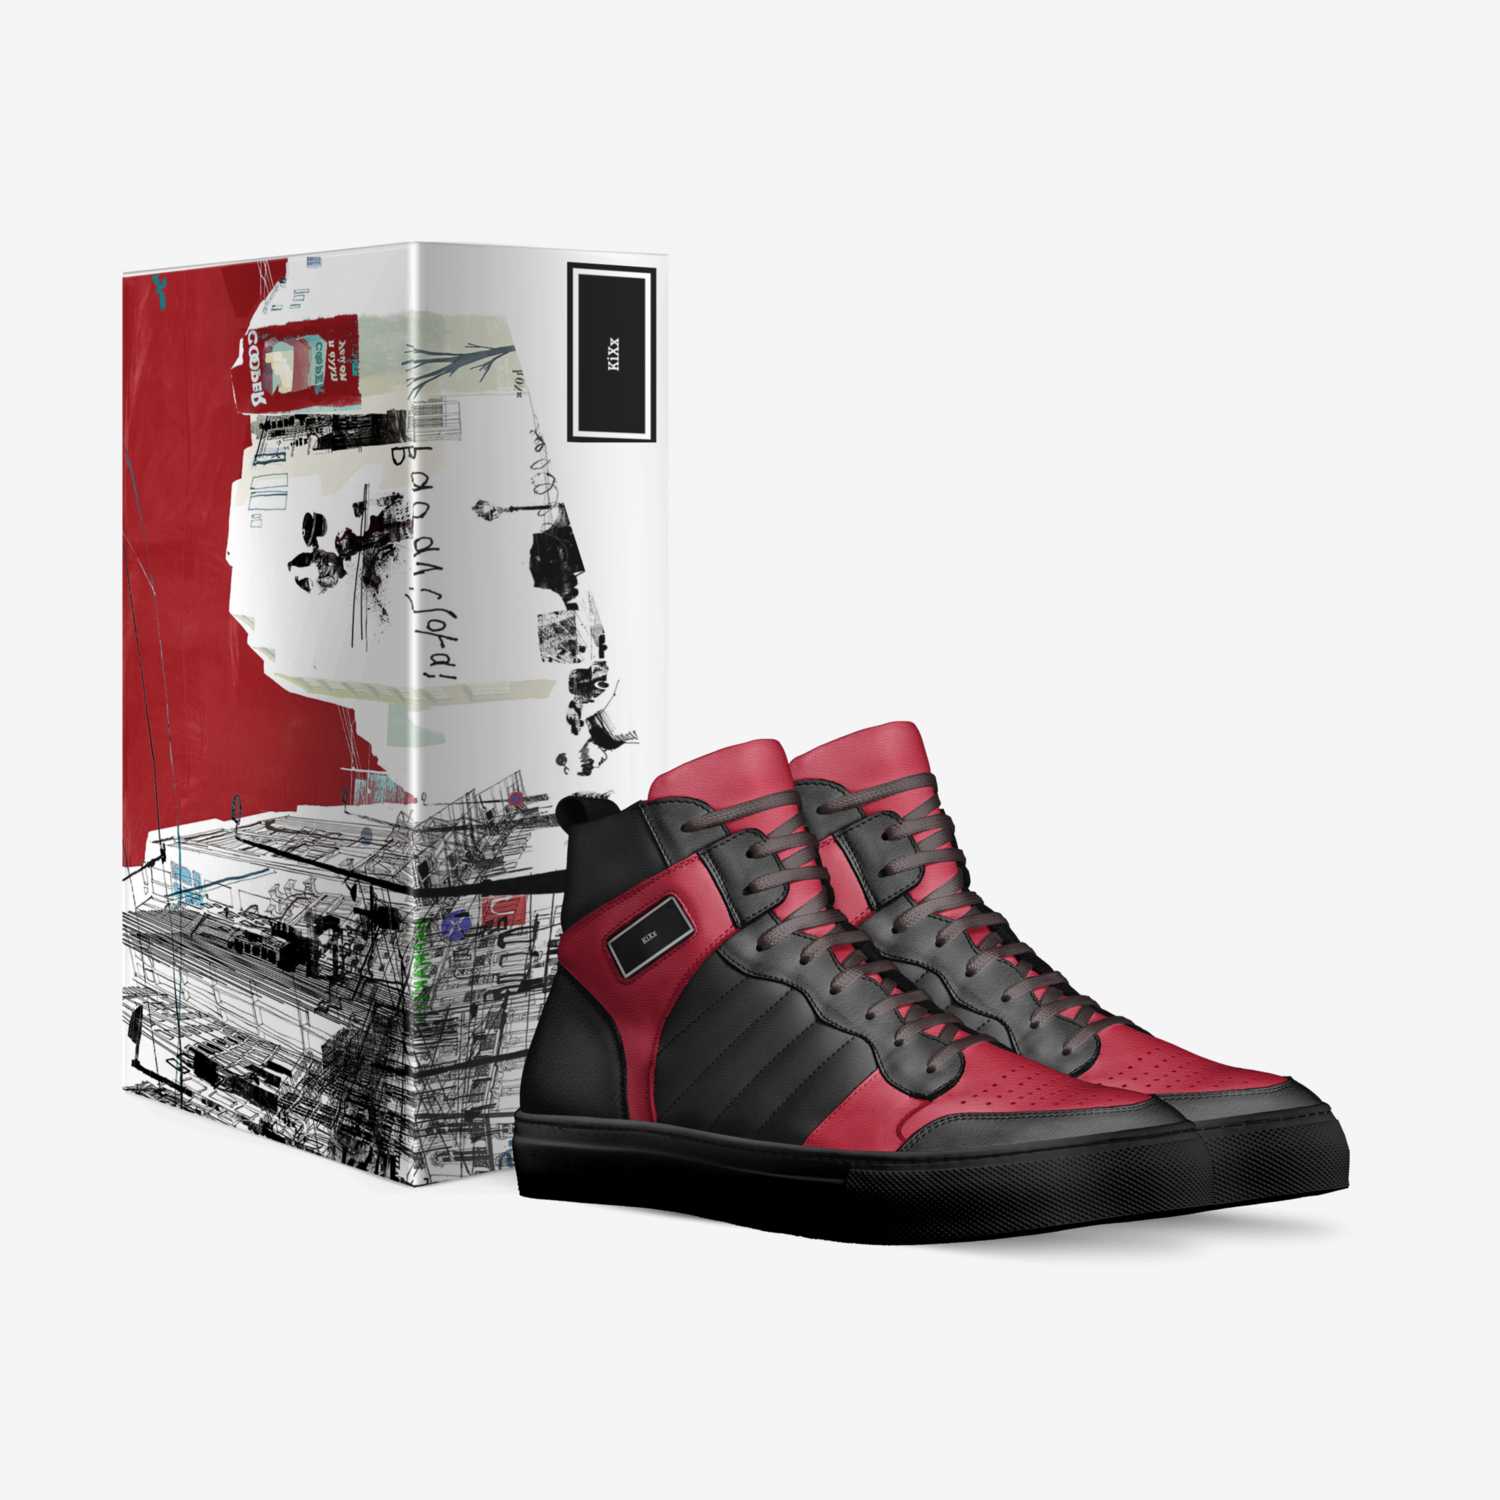 KiXx custom made in Italy shoes by Kickman Teddy | Box view